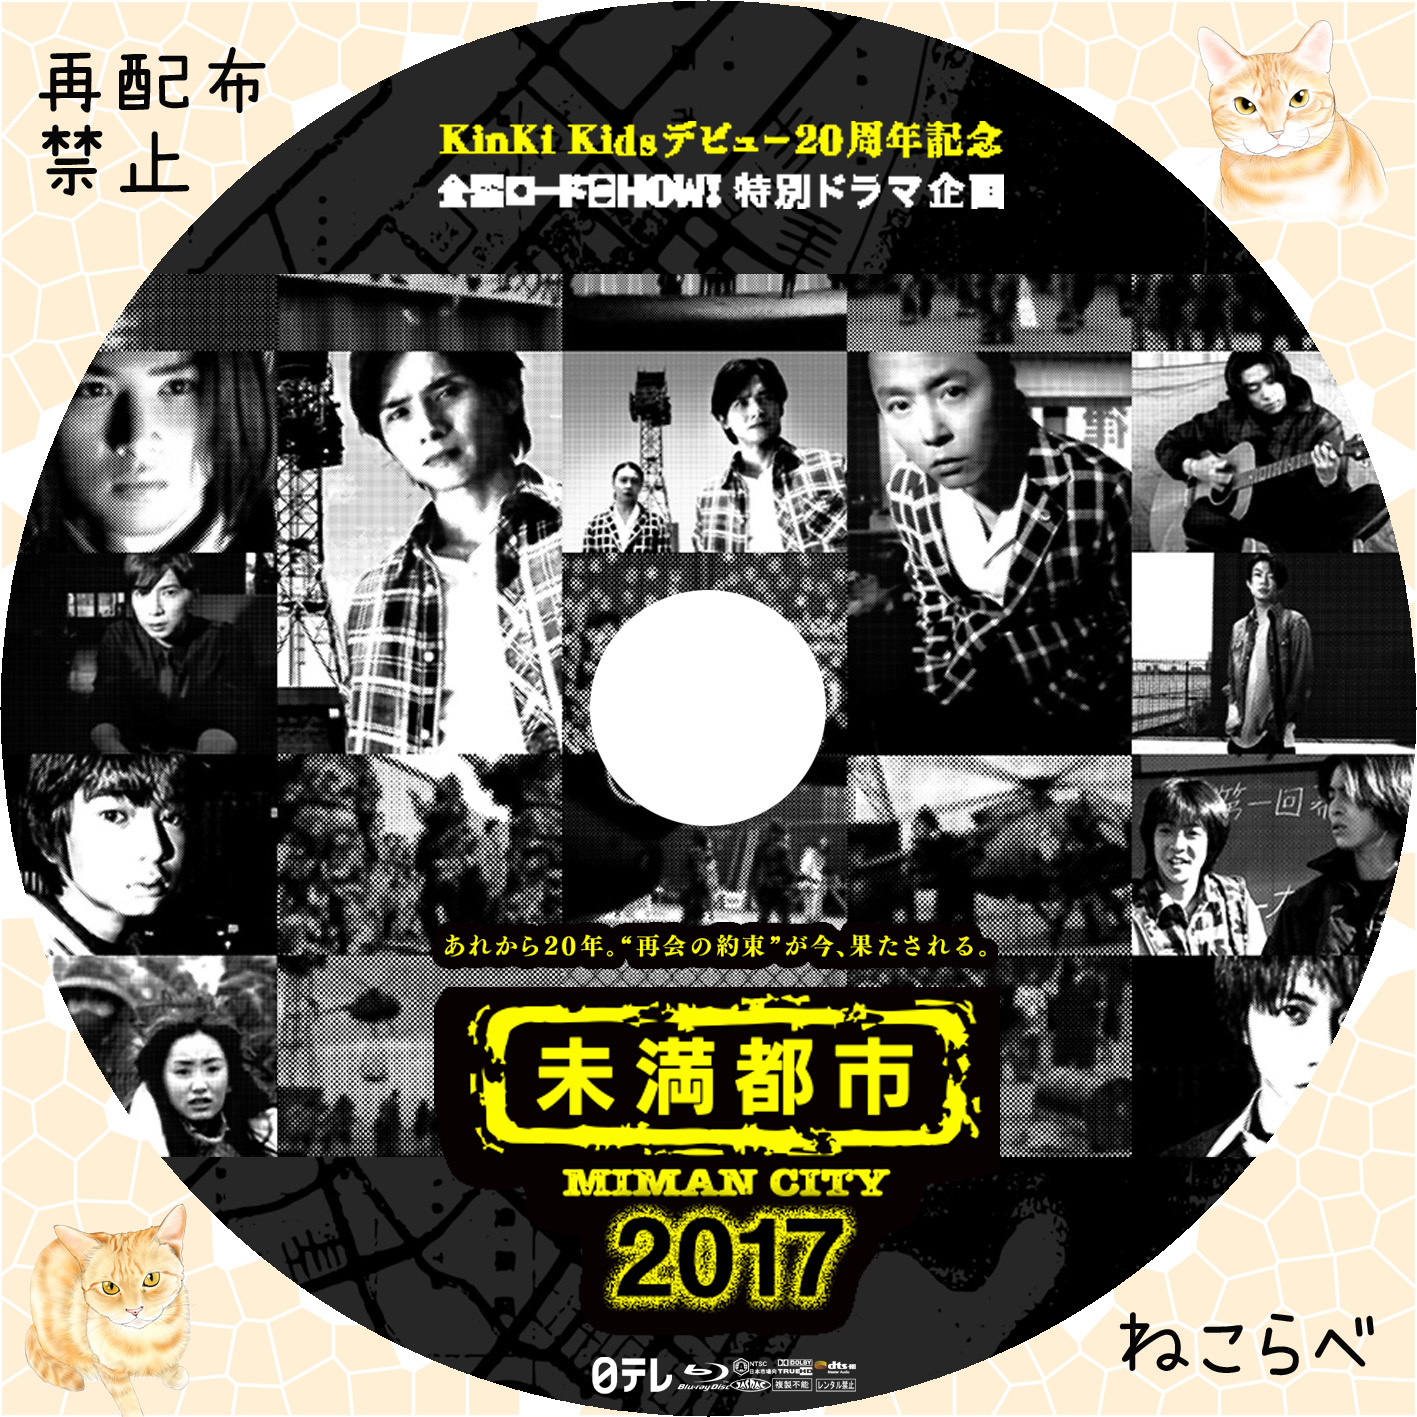 KinKi ぼくらの勇気 未満都市 2017 DVD KinKiKids